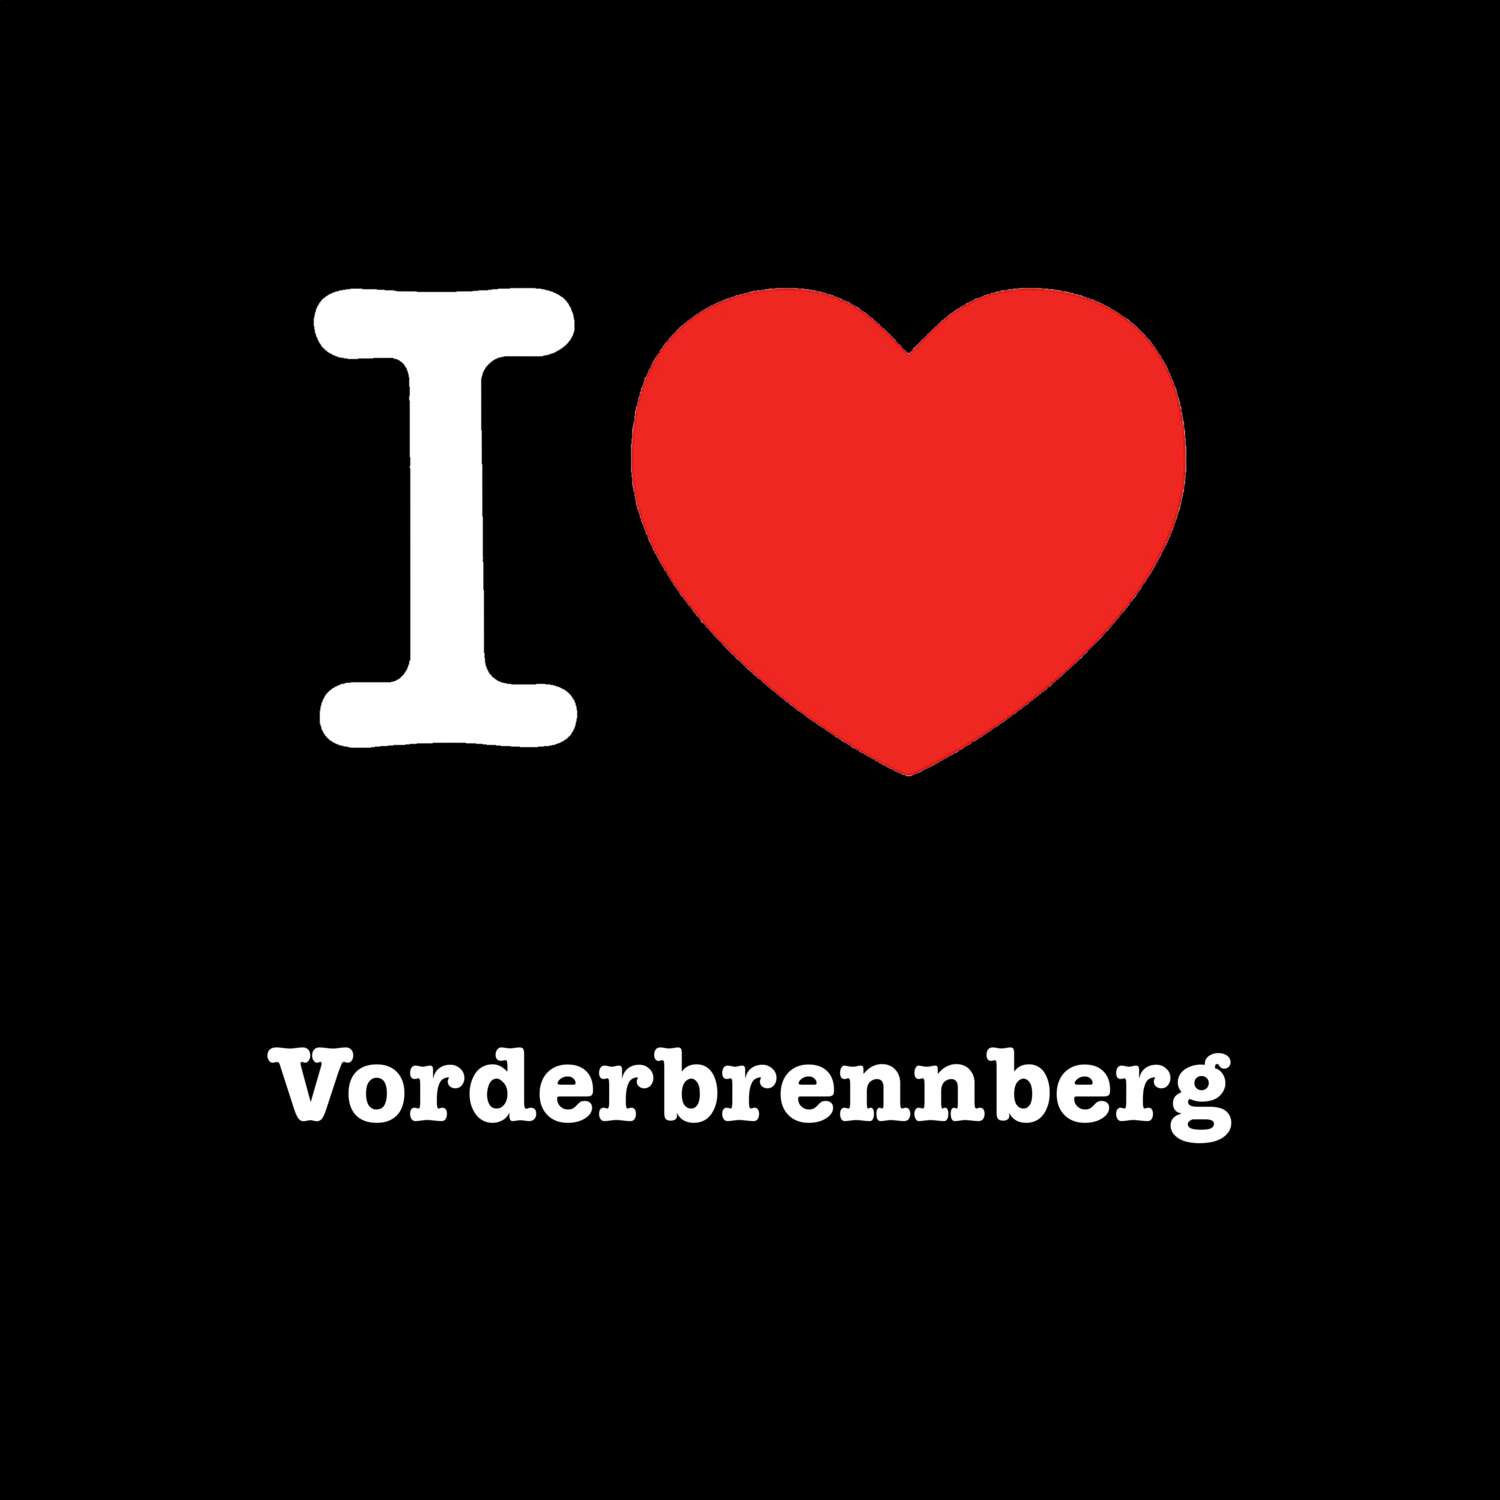 Vorderbrennberg T-Shirt »I love«